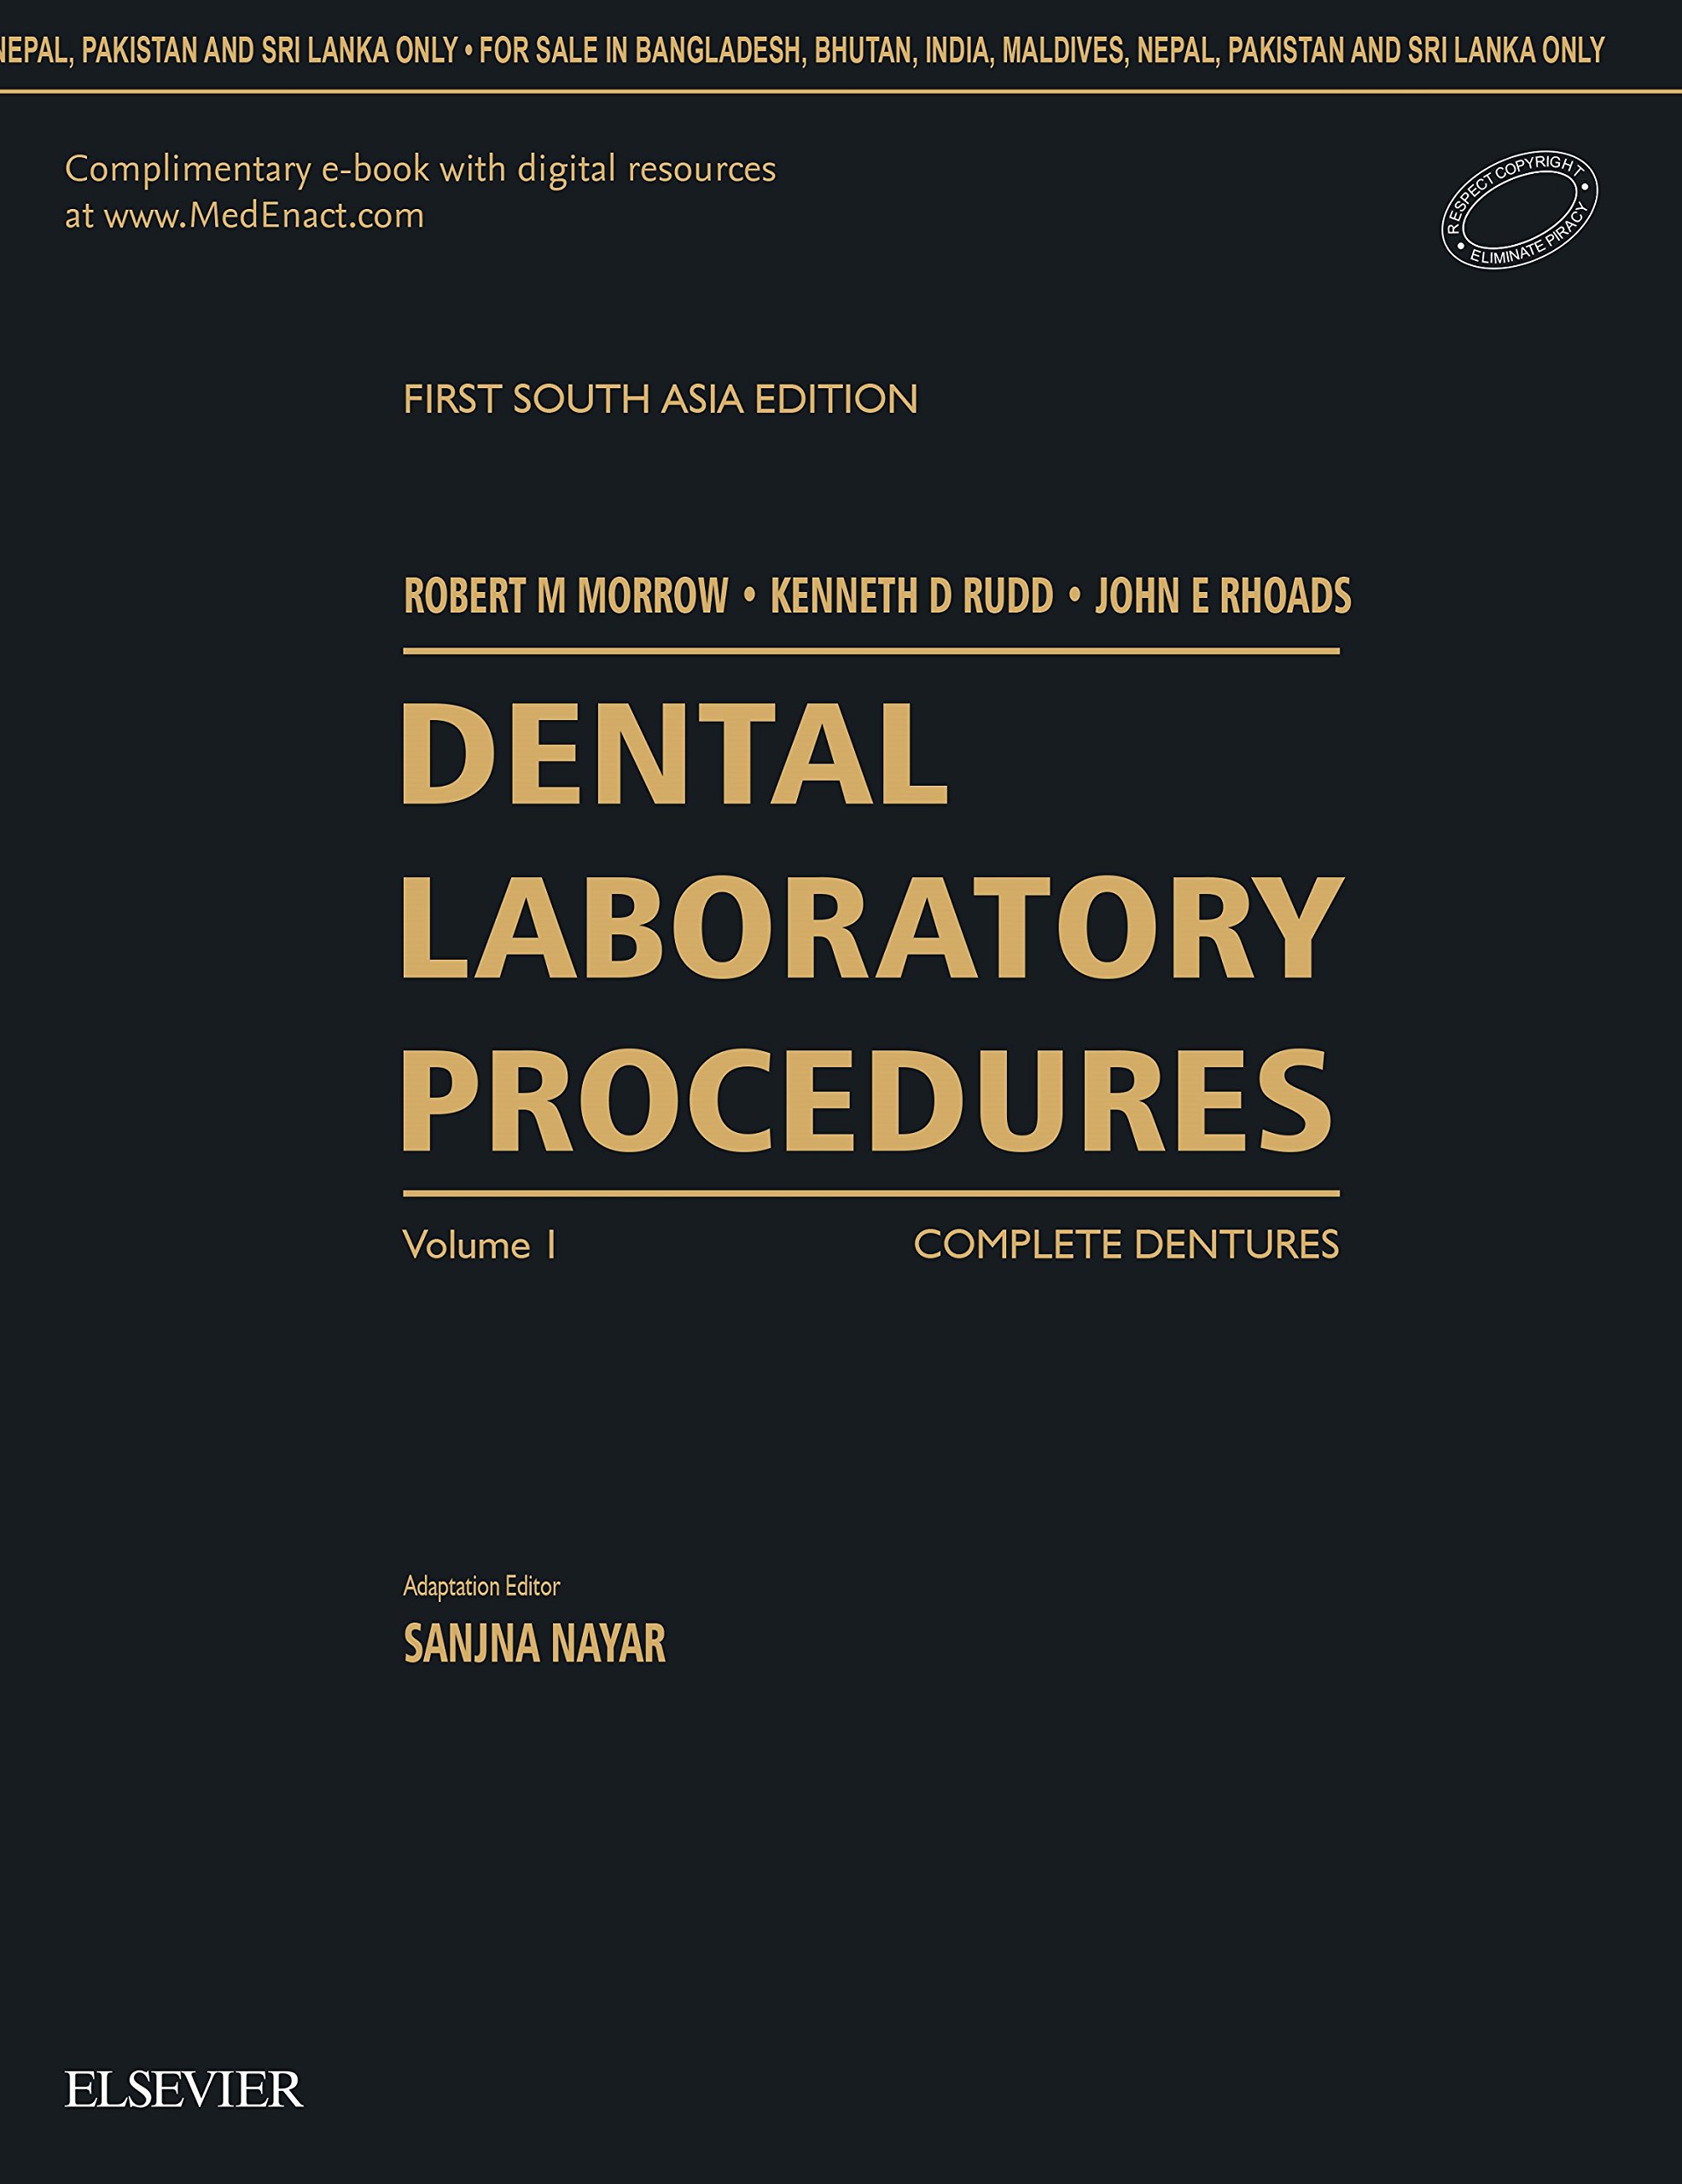 Dental Laboratory, Procedure: First South Asia Edition (3 Vol Set): Volume 1: Complete Dentures, Volume 2: Fixed Partial Dentures, Volume 3: Removable Partial Dentures